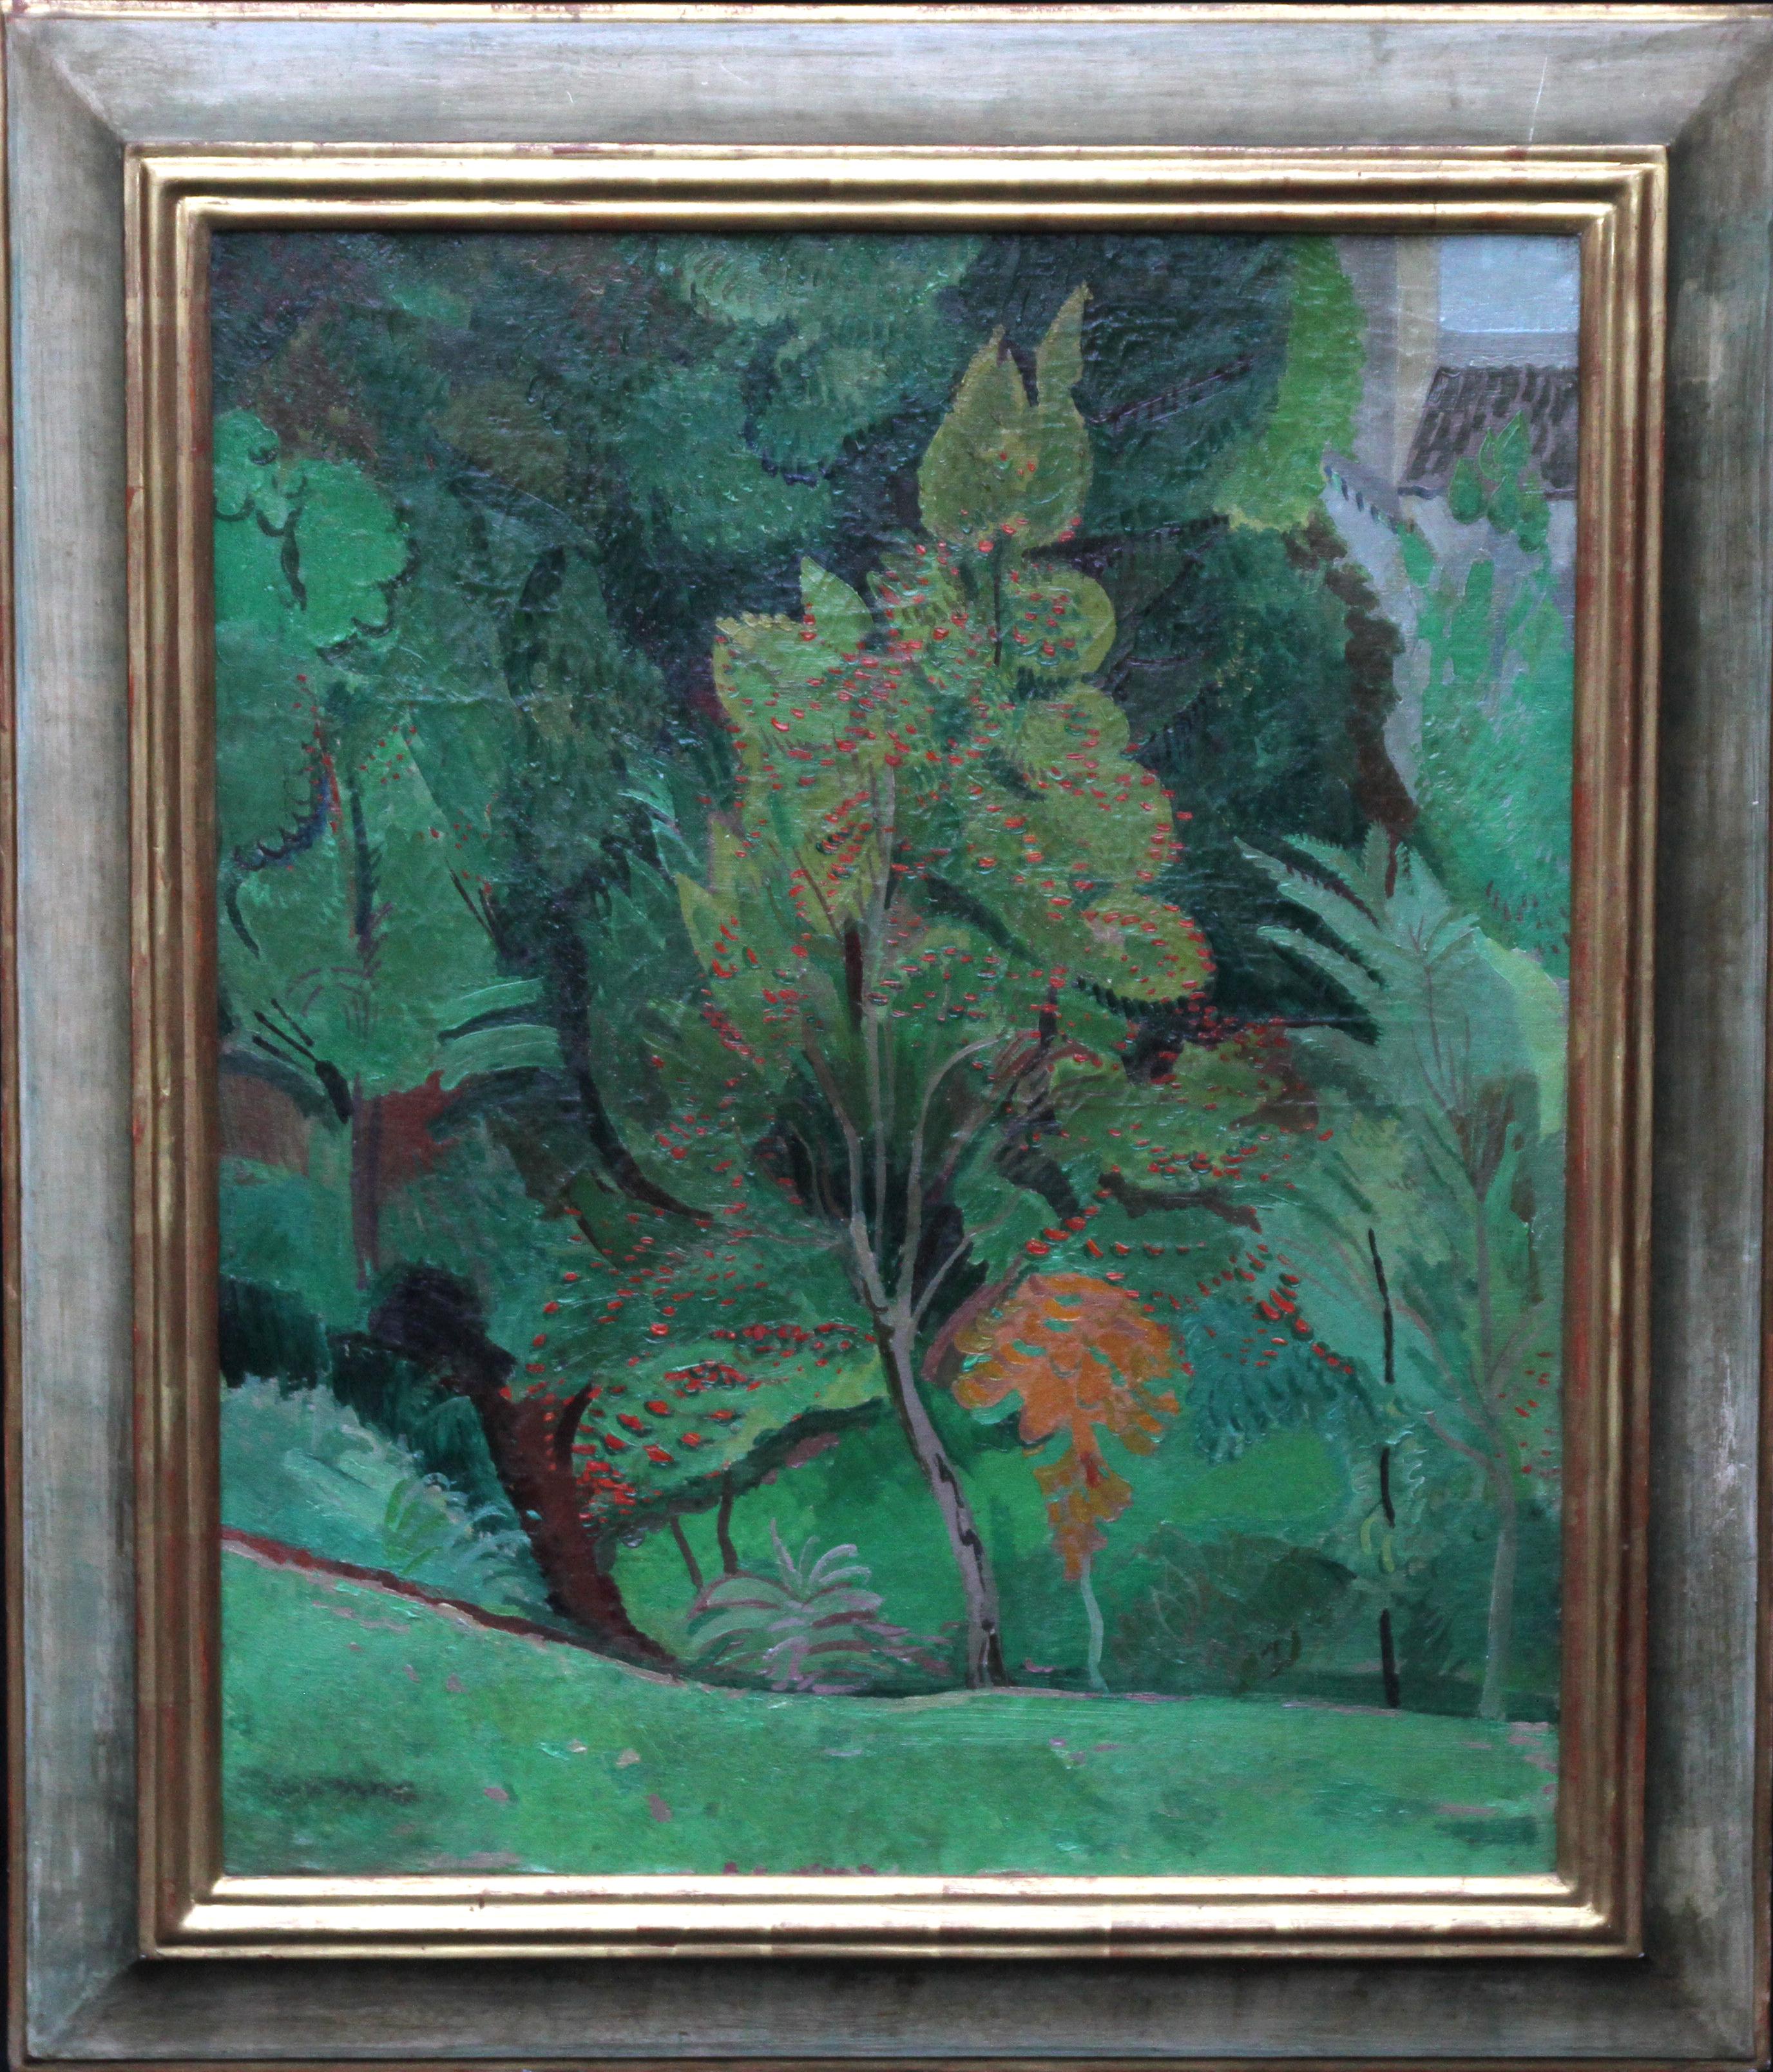 Duncan Grant (circle) Landscape Painting - Trees - Post Impressionist 30's landscape oil painting British Modernist art